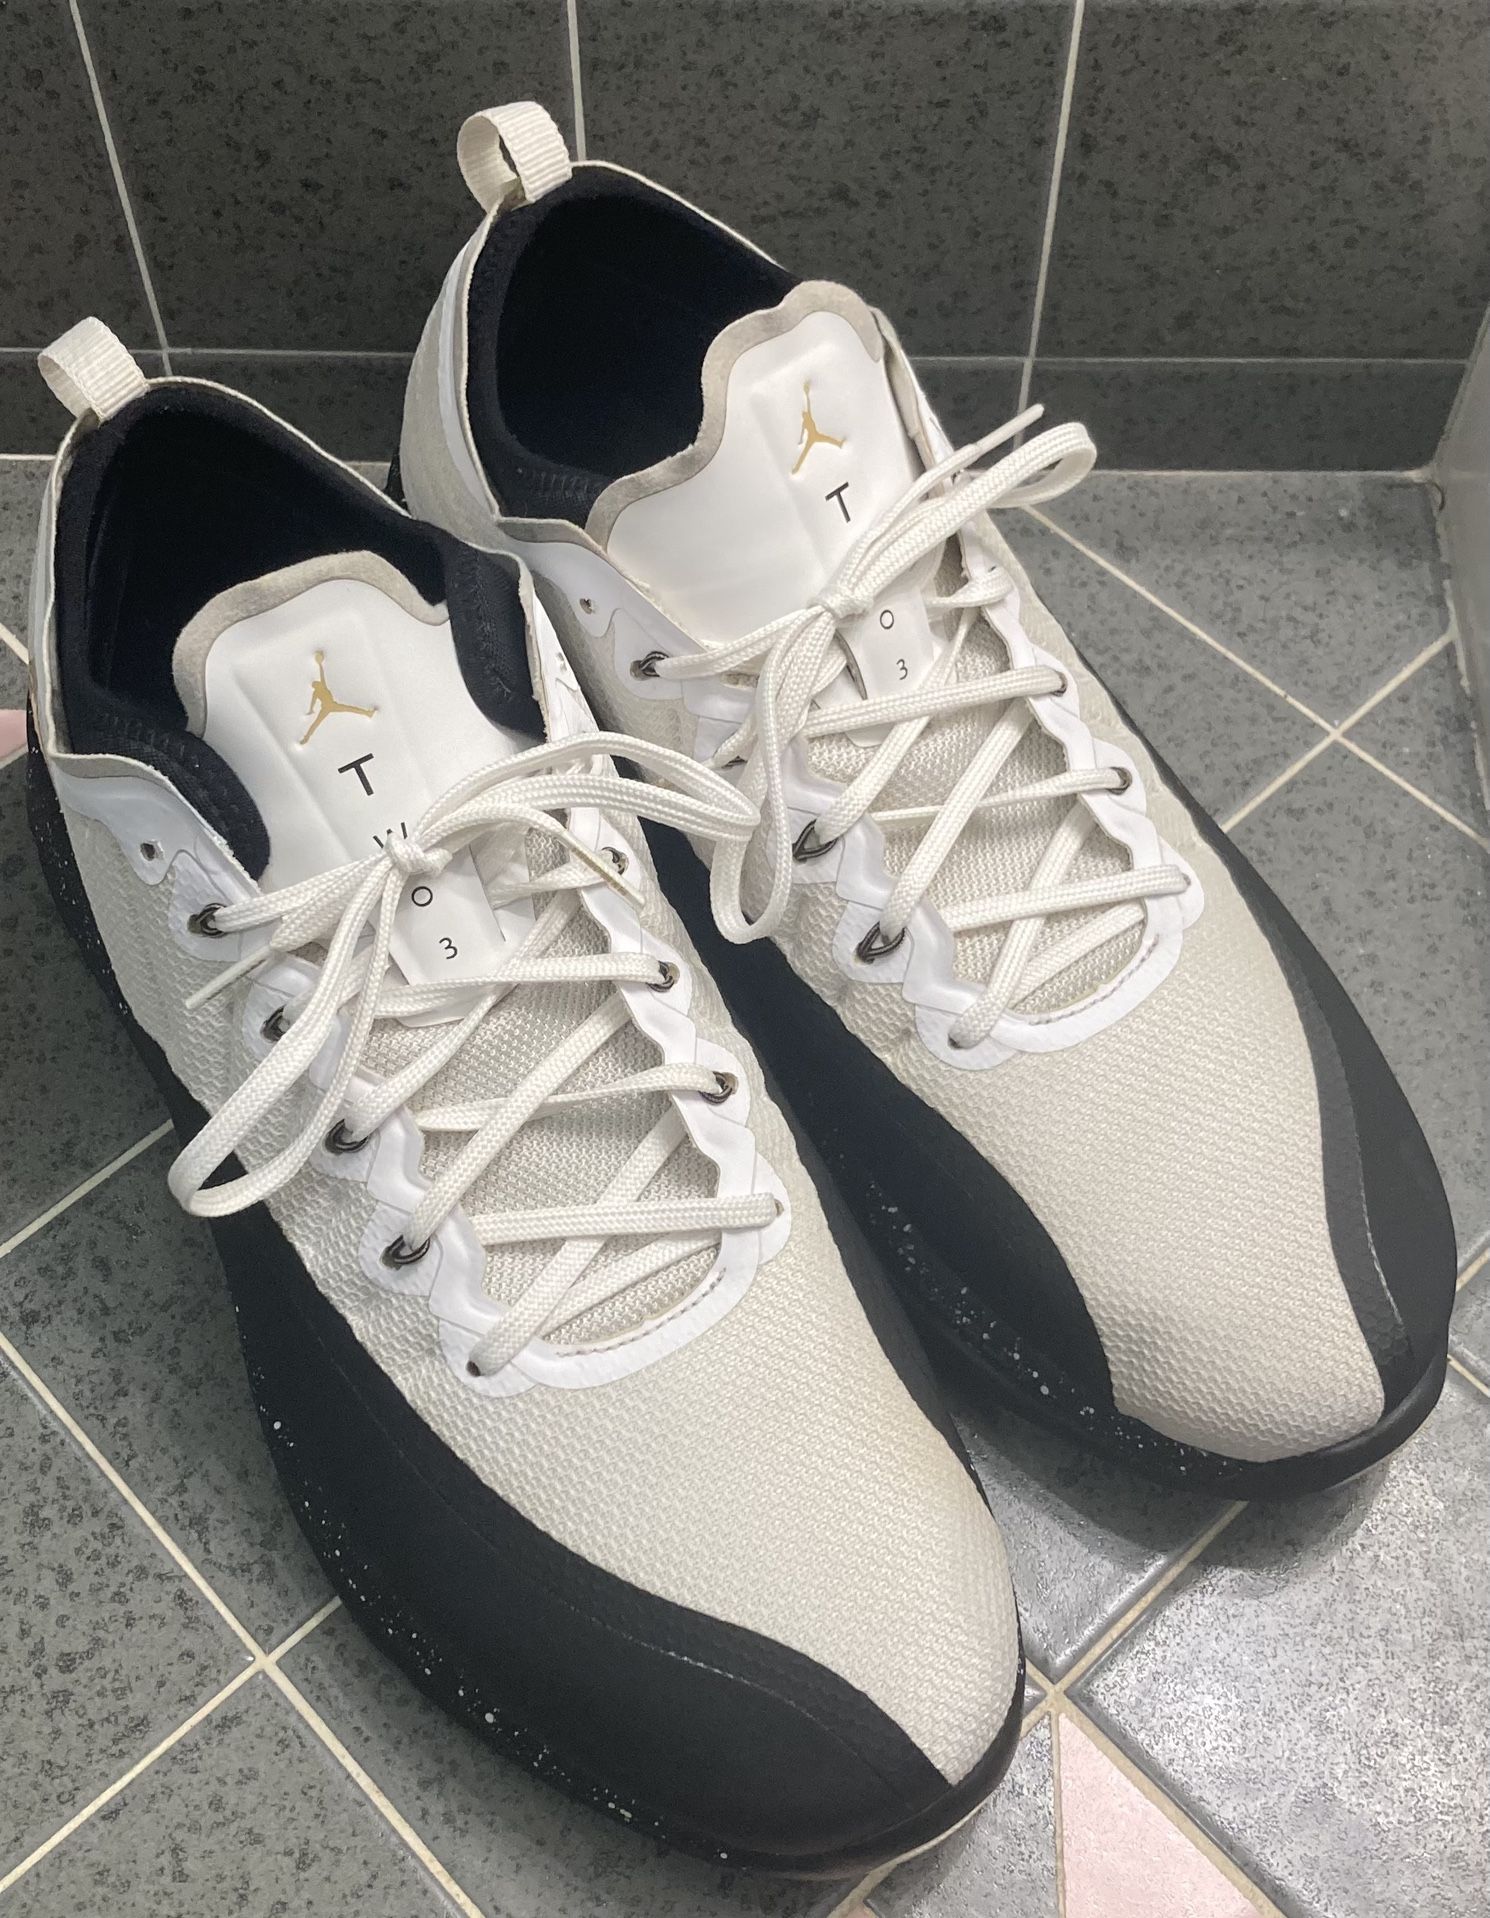 Air Jordan Nike Trainer Prime Size 13 shoes